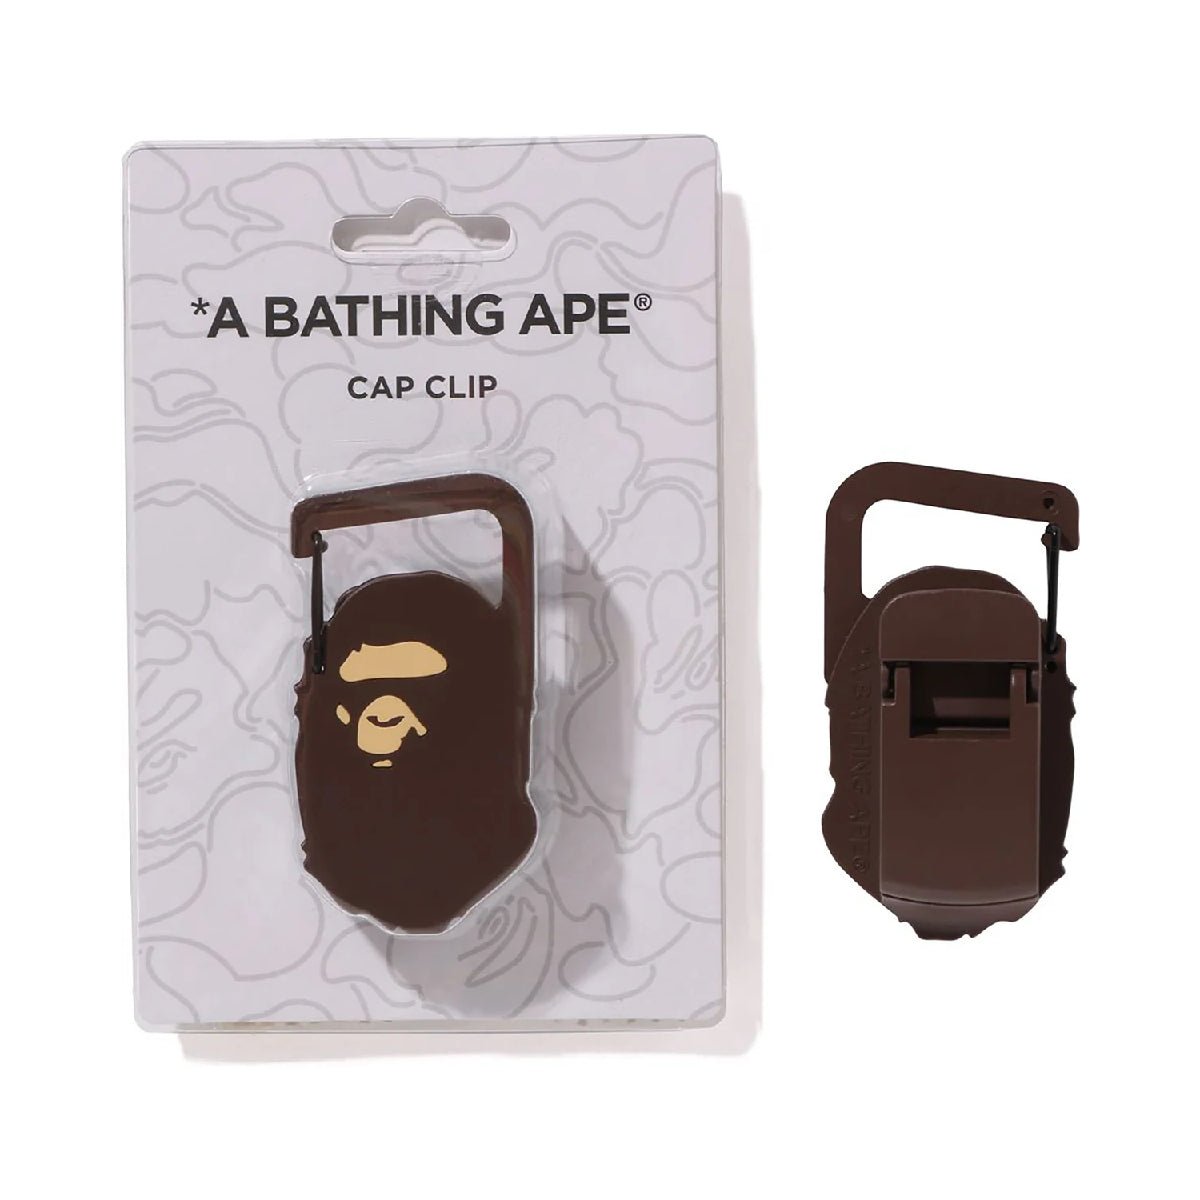 Bape Cap Clip - A Bathing Ape